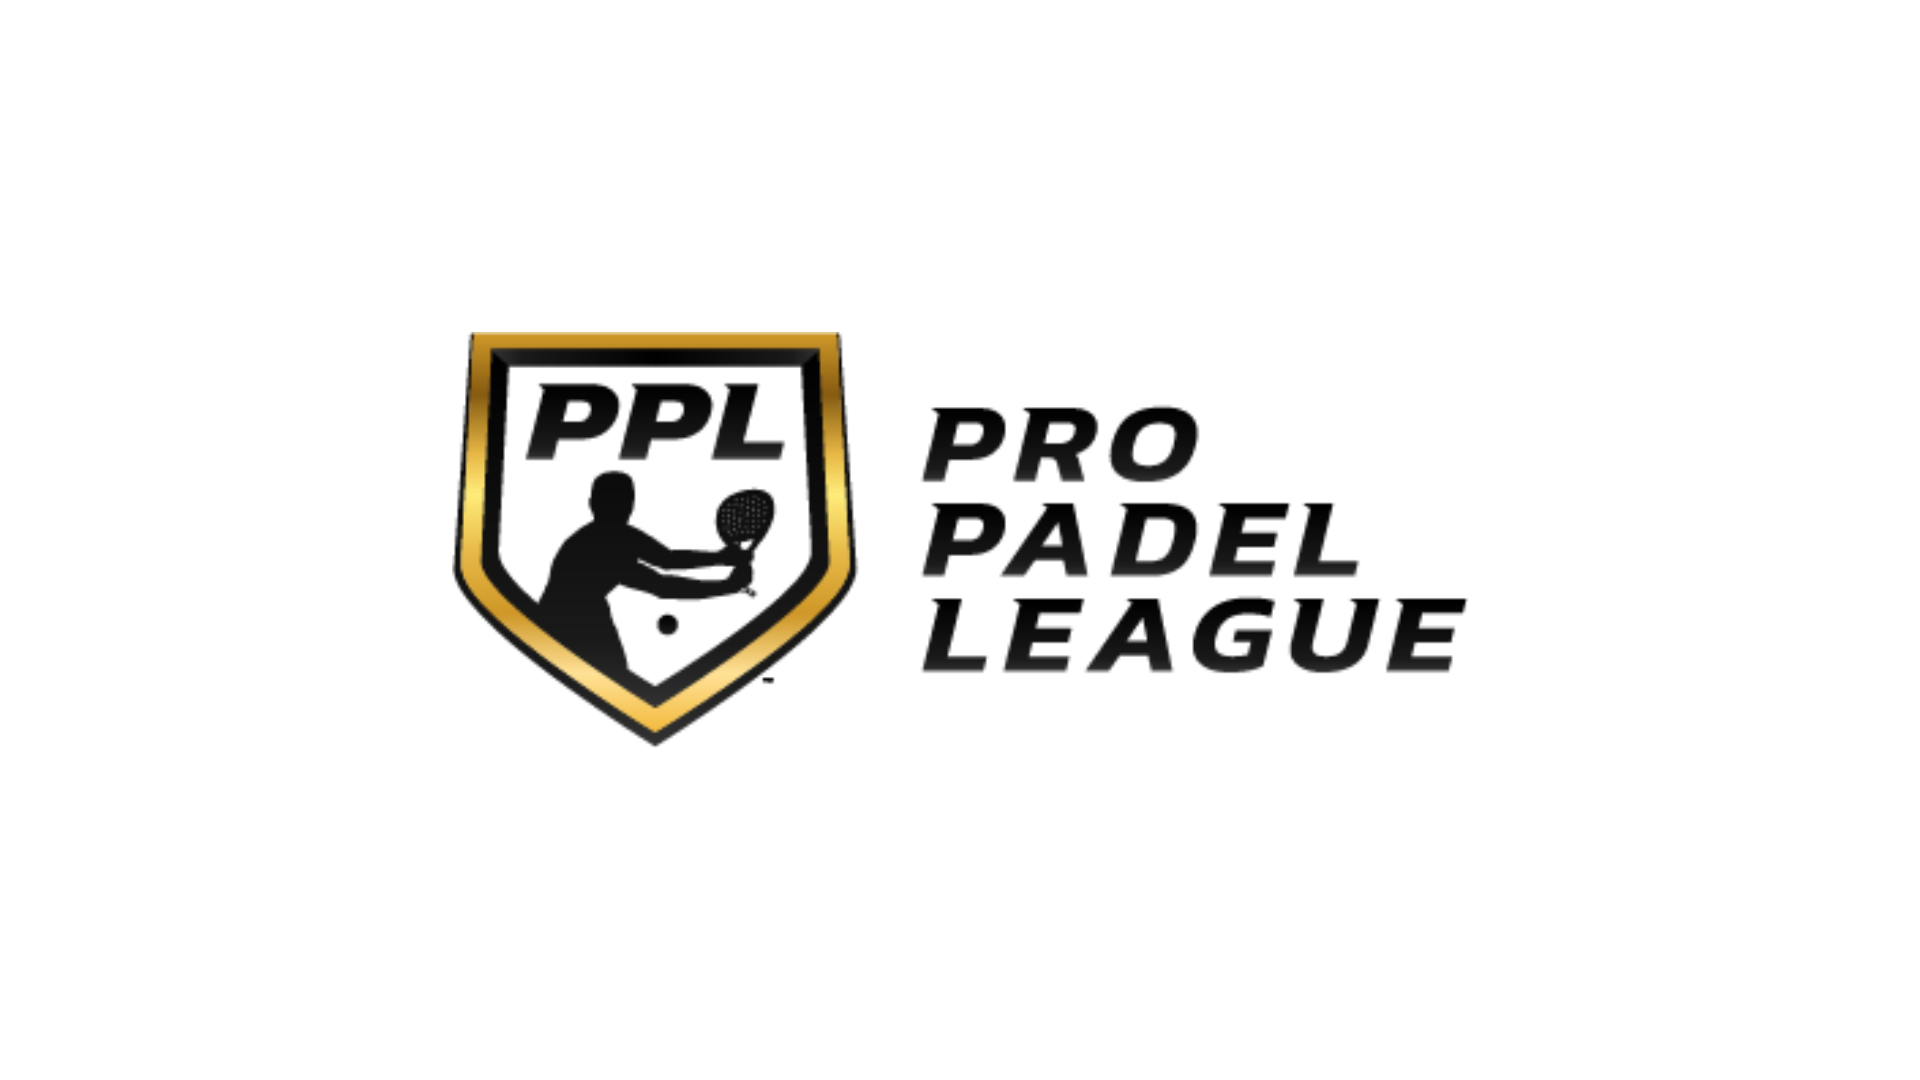 Pro Padel League logo